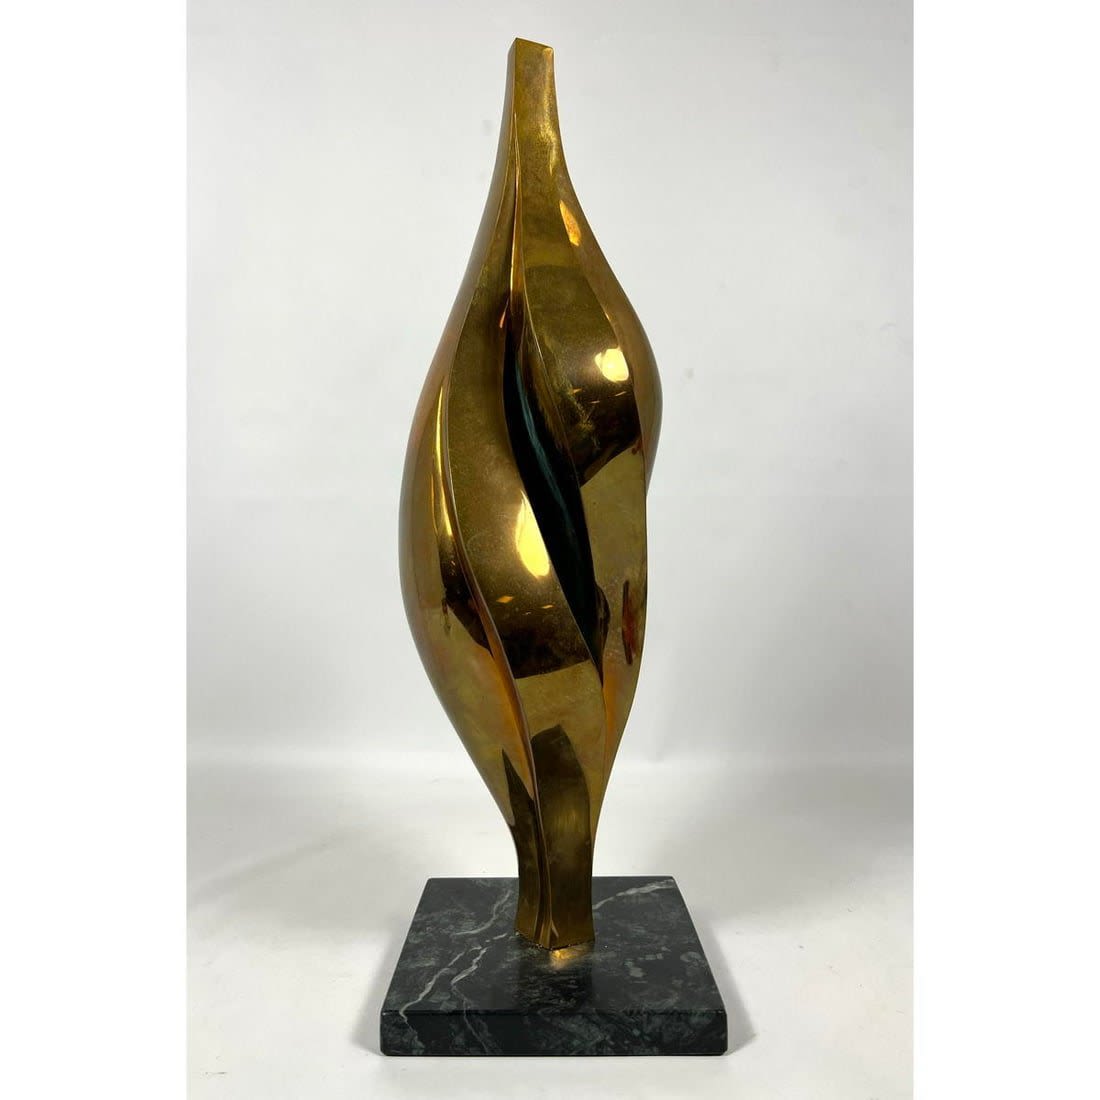 Modernist Bronze Sculpture. Stylized